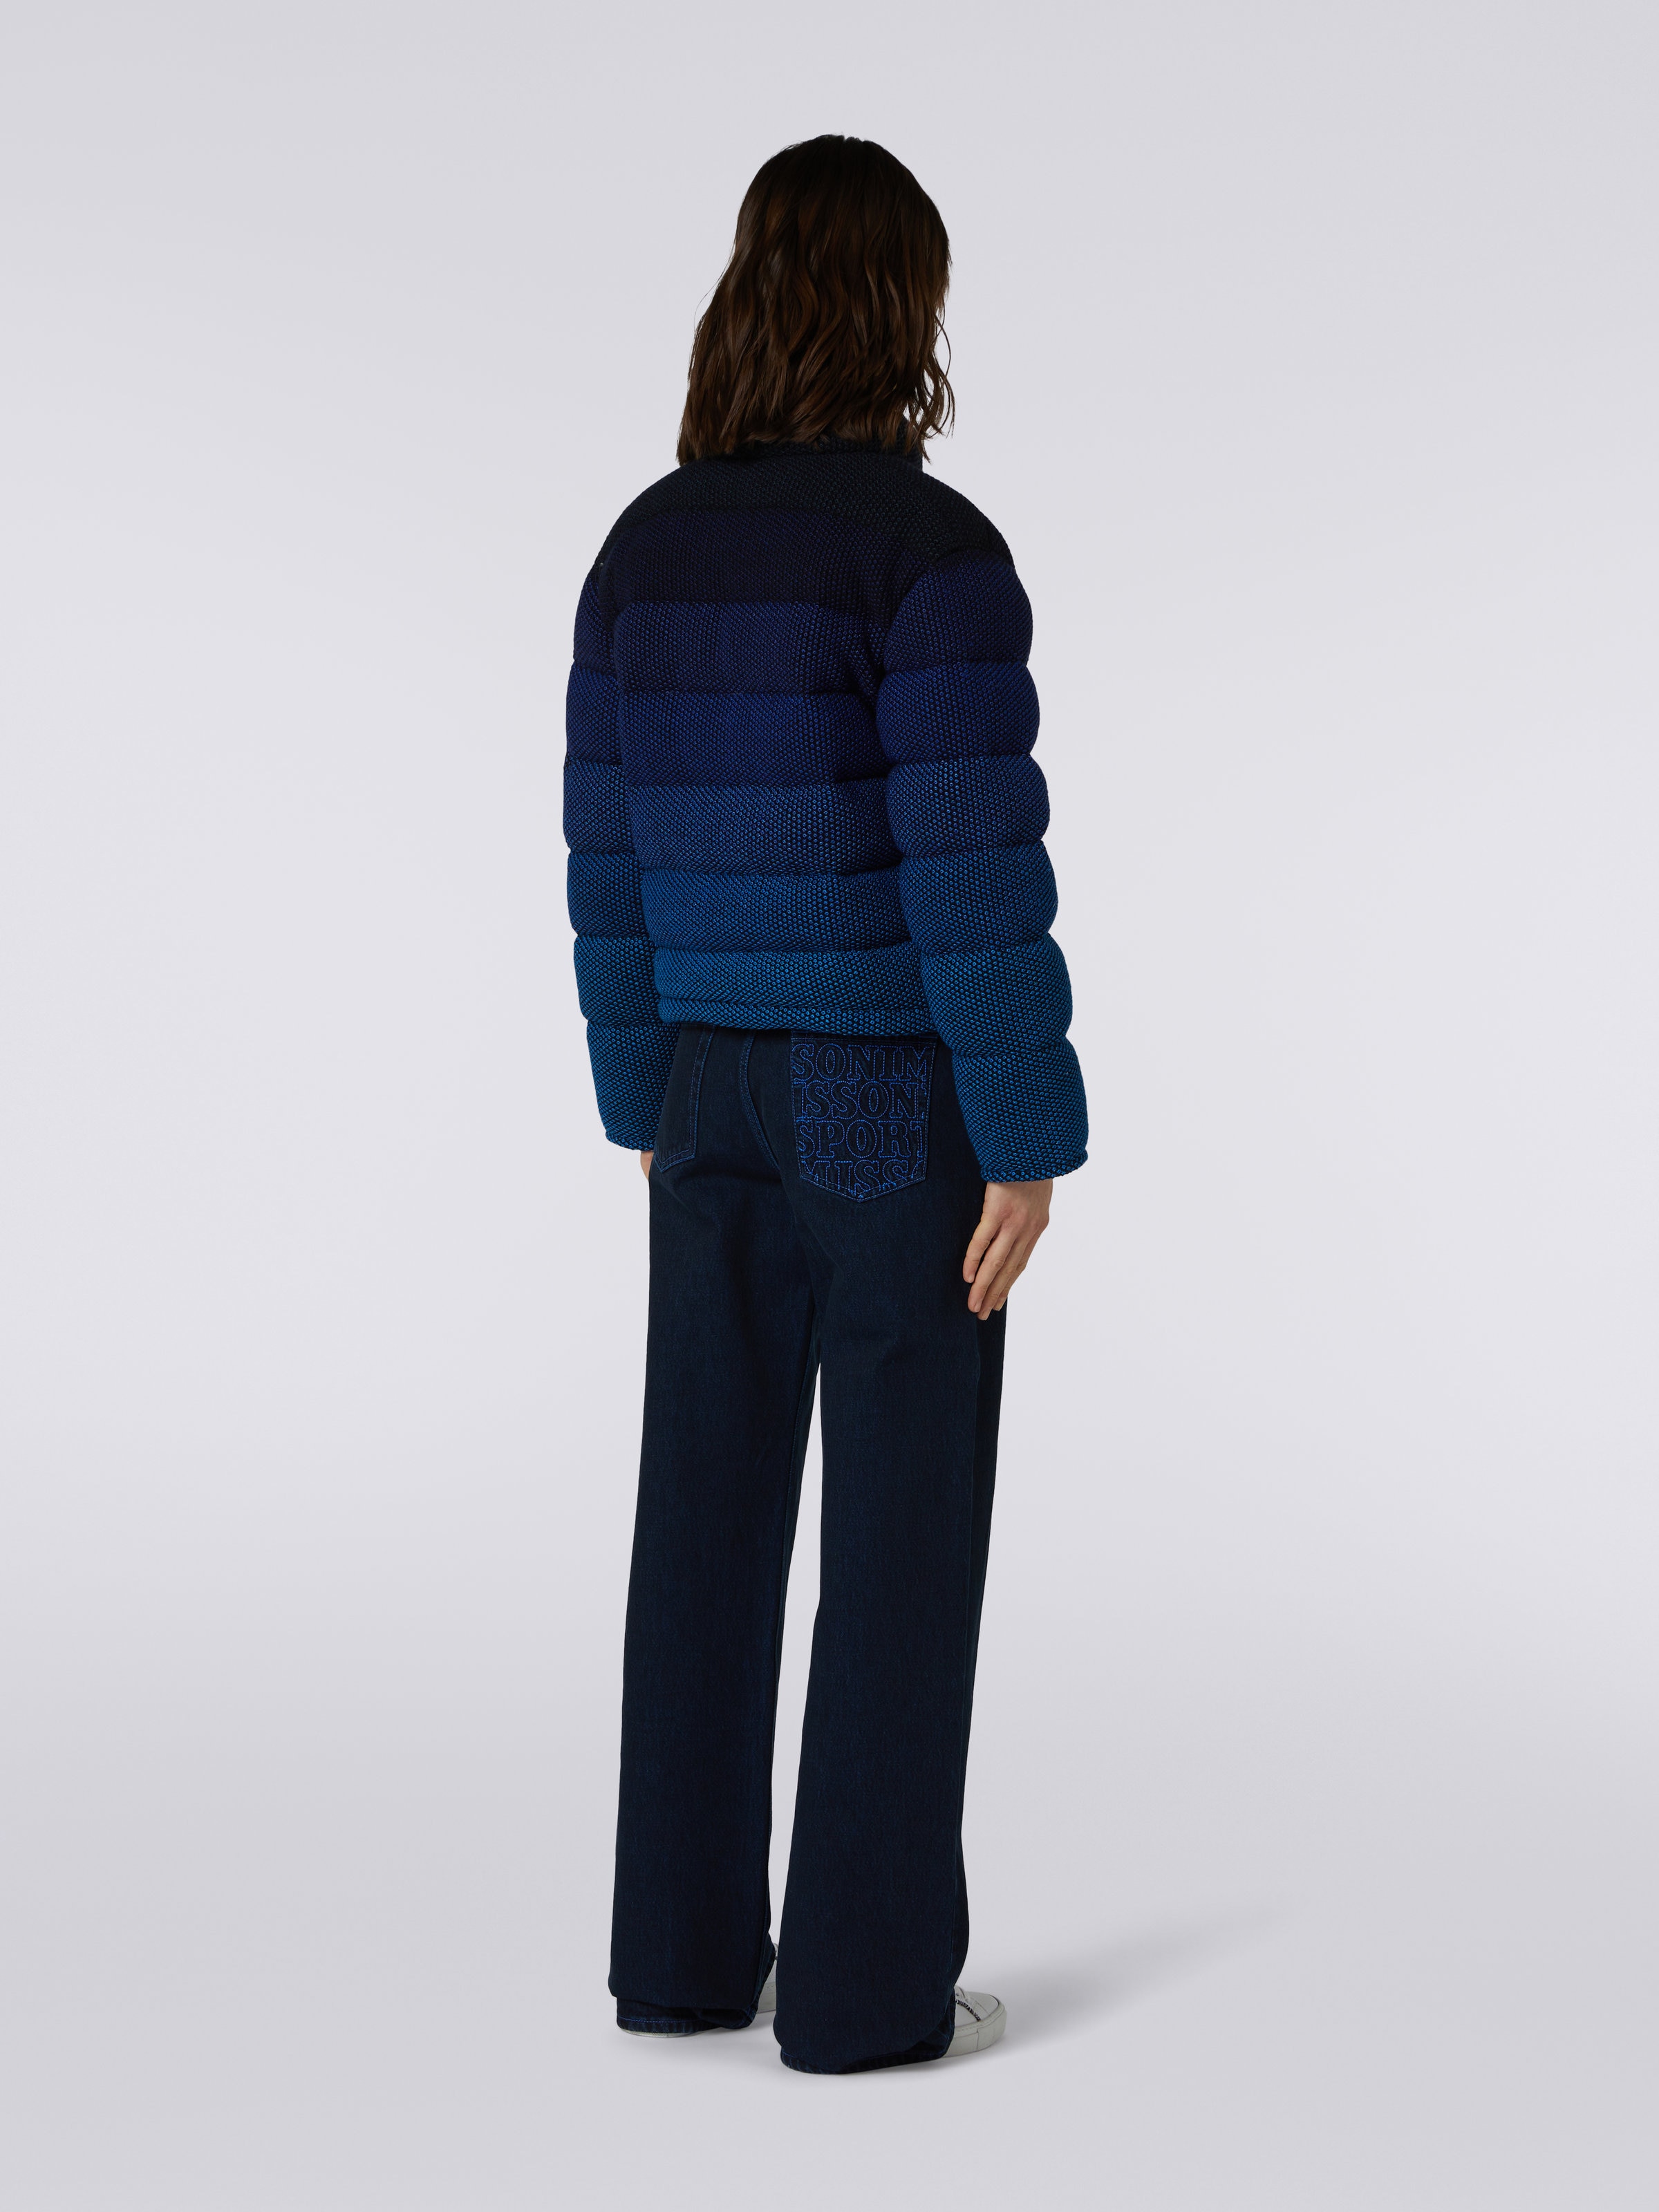 Cropped jacket in dégradé padded cotton blend, Black & Blue - 3